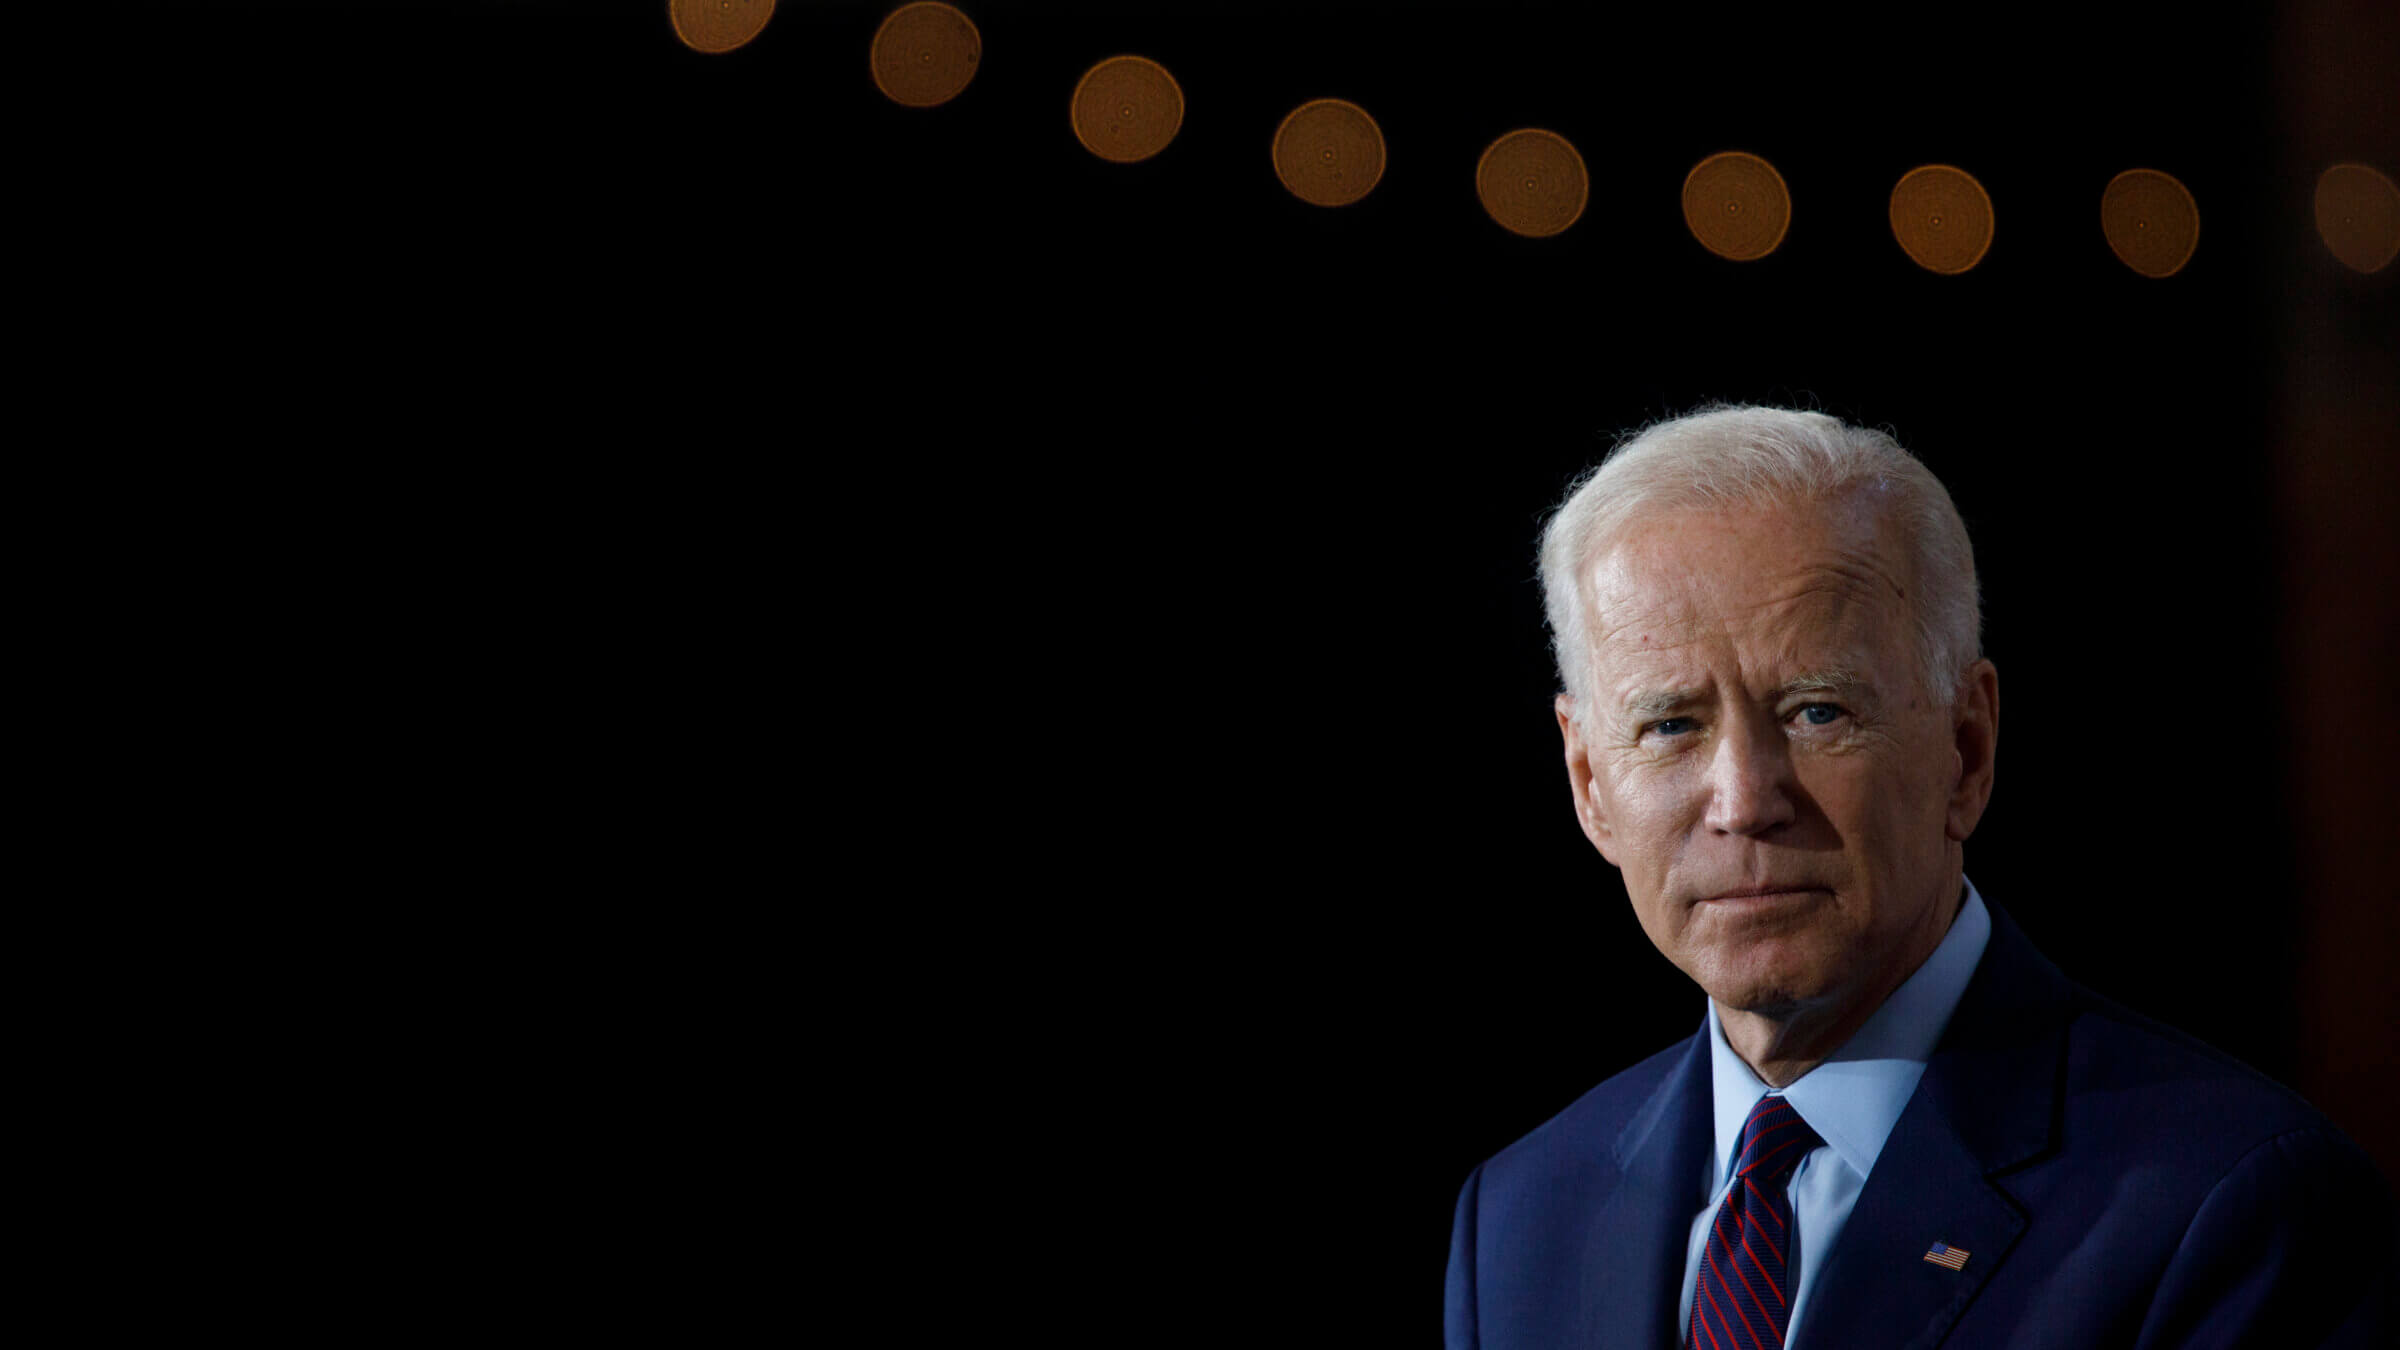 Joe Biden during a campaign press conference on August 7, 2019 in Burlington, Iowa.